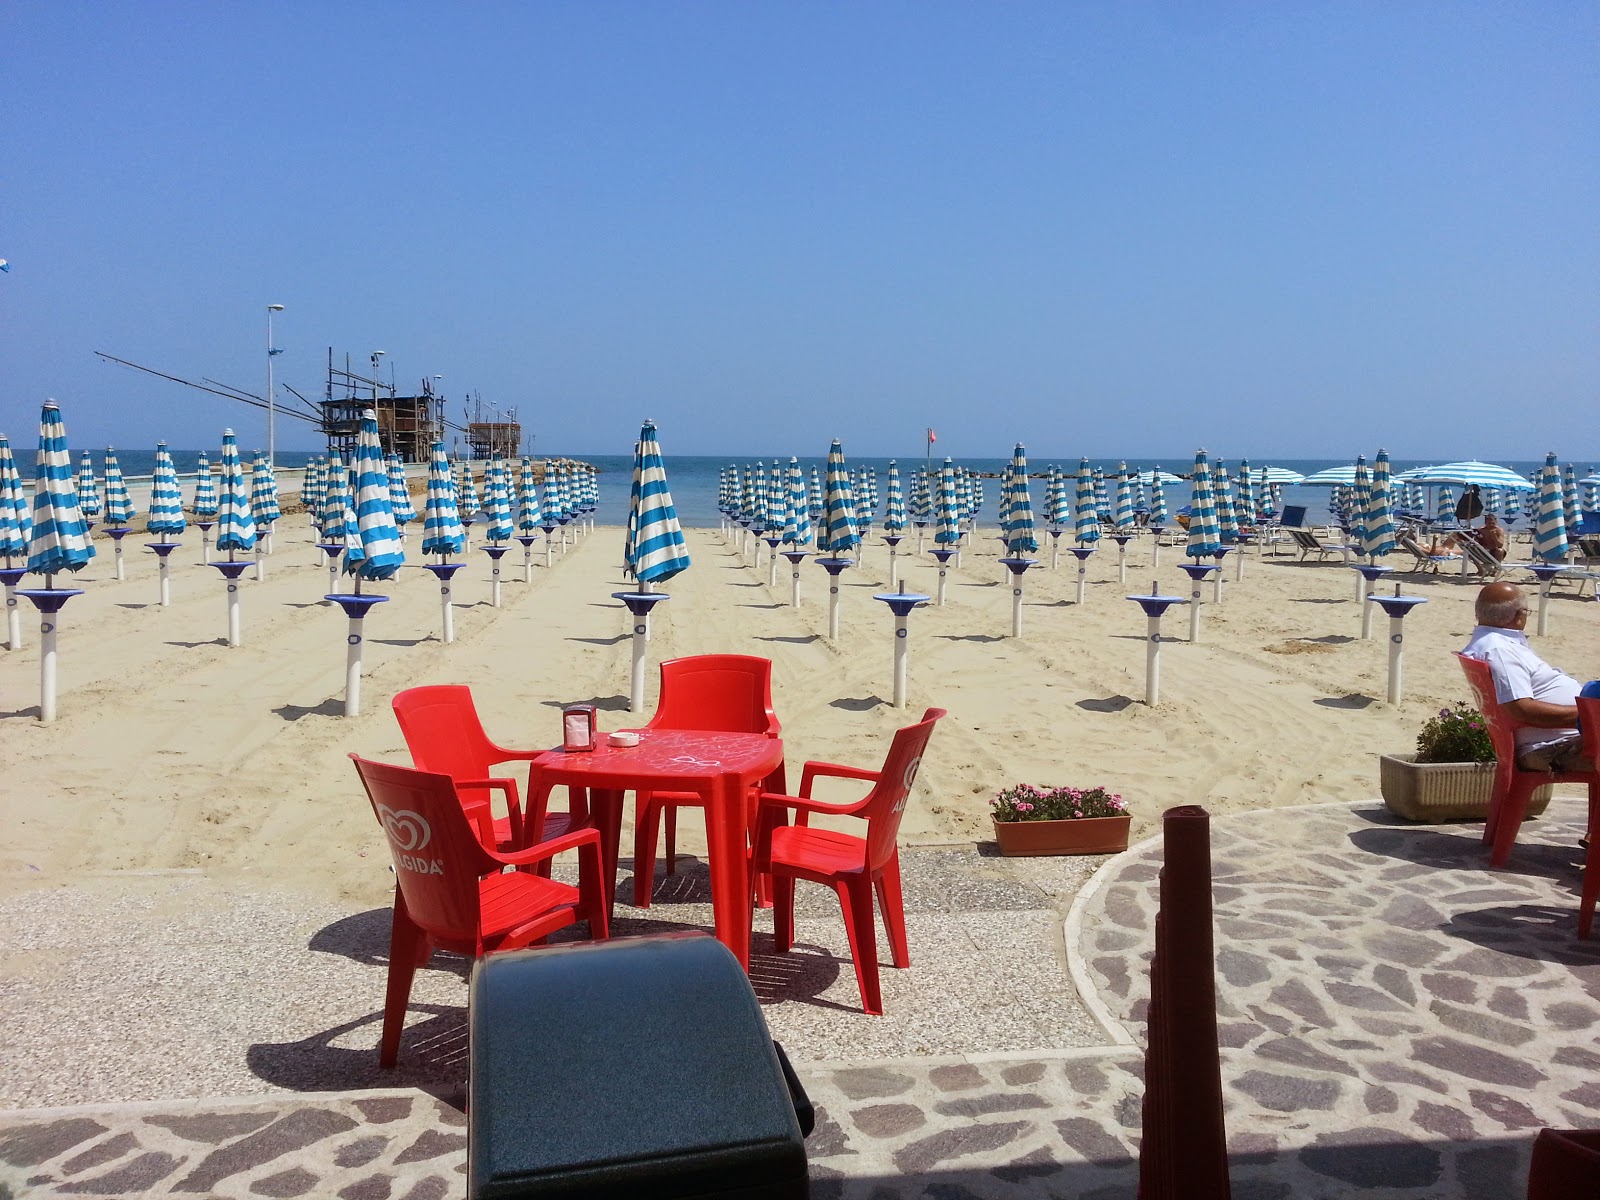 San Vito Chietino'in fotoğrafı plaj tatil beldesi alanı